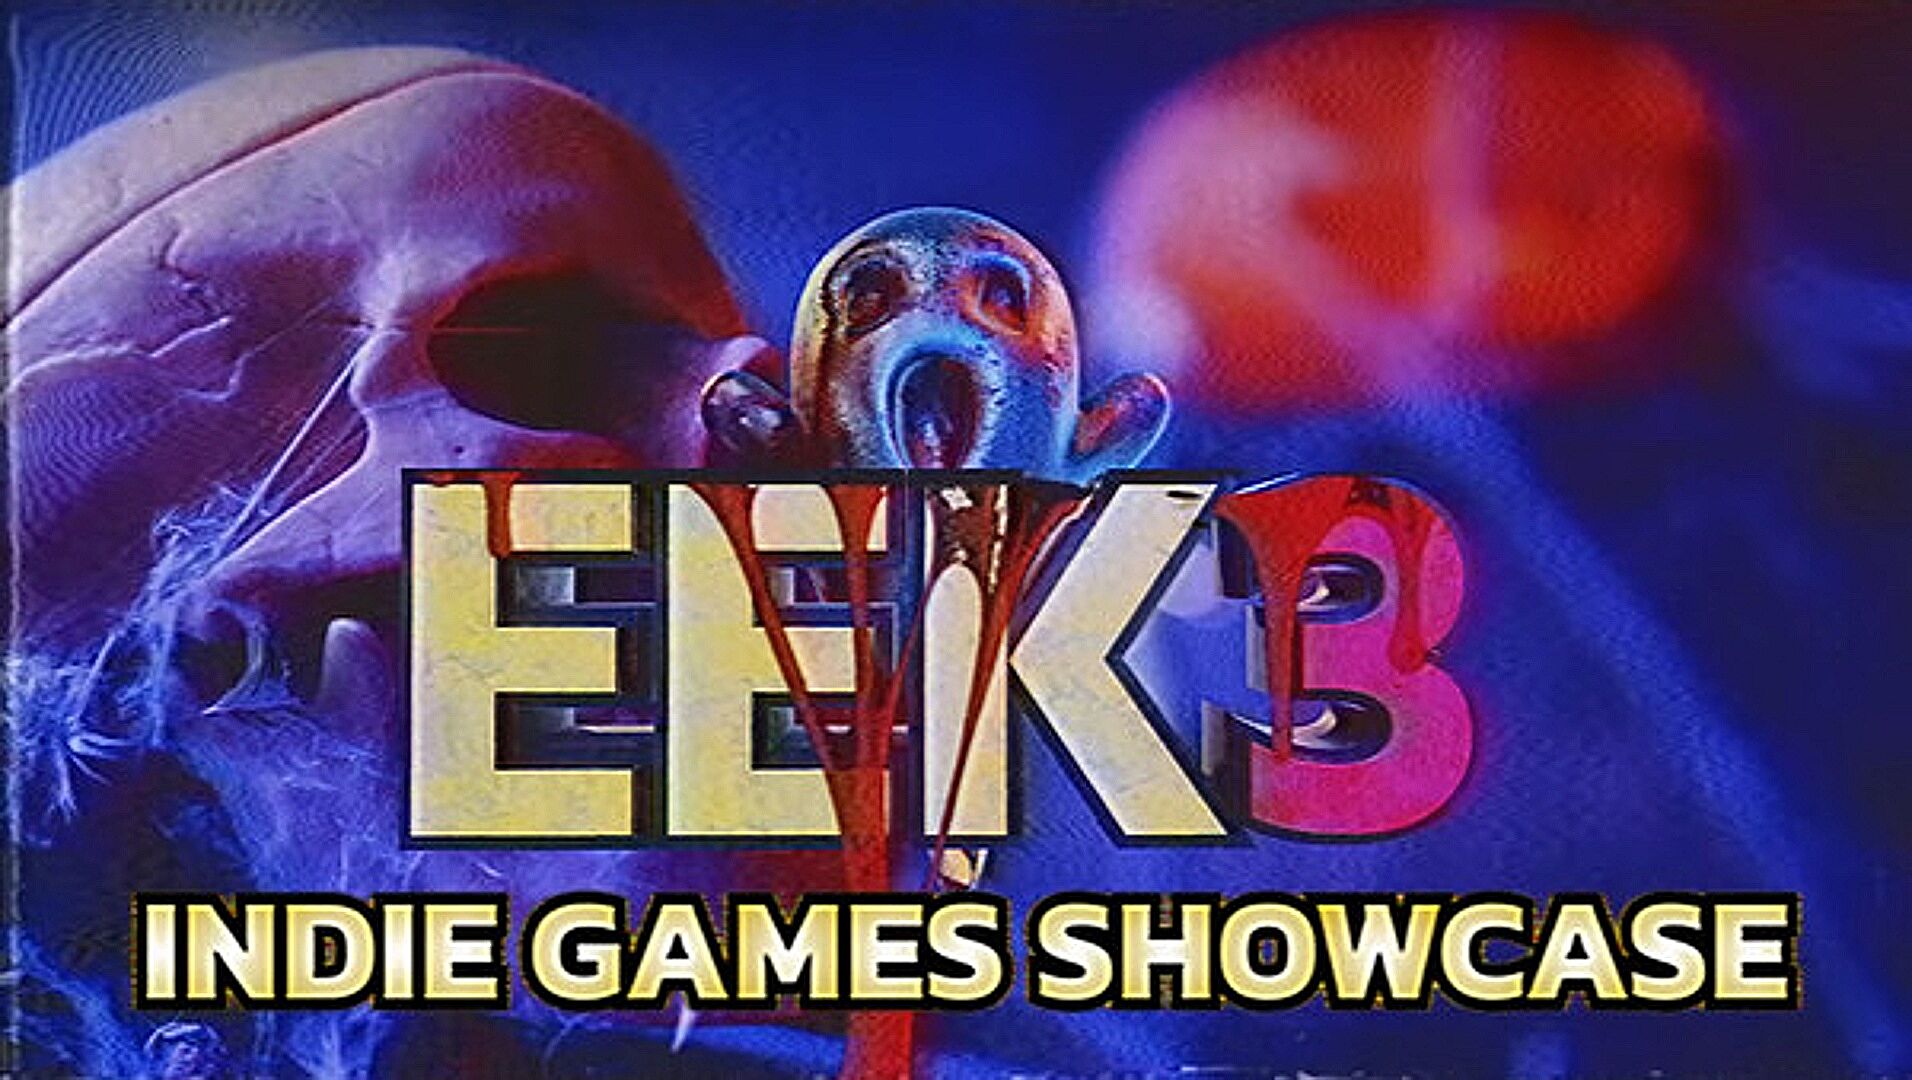 Indie horror showcase EEK3 goes bump again tonight